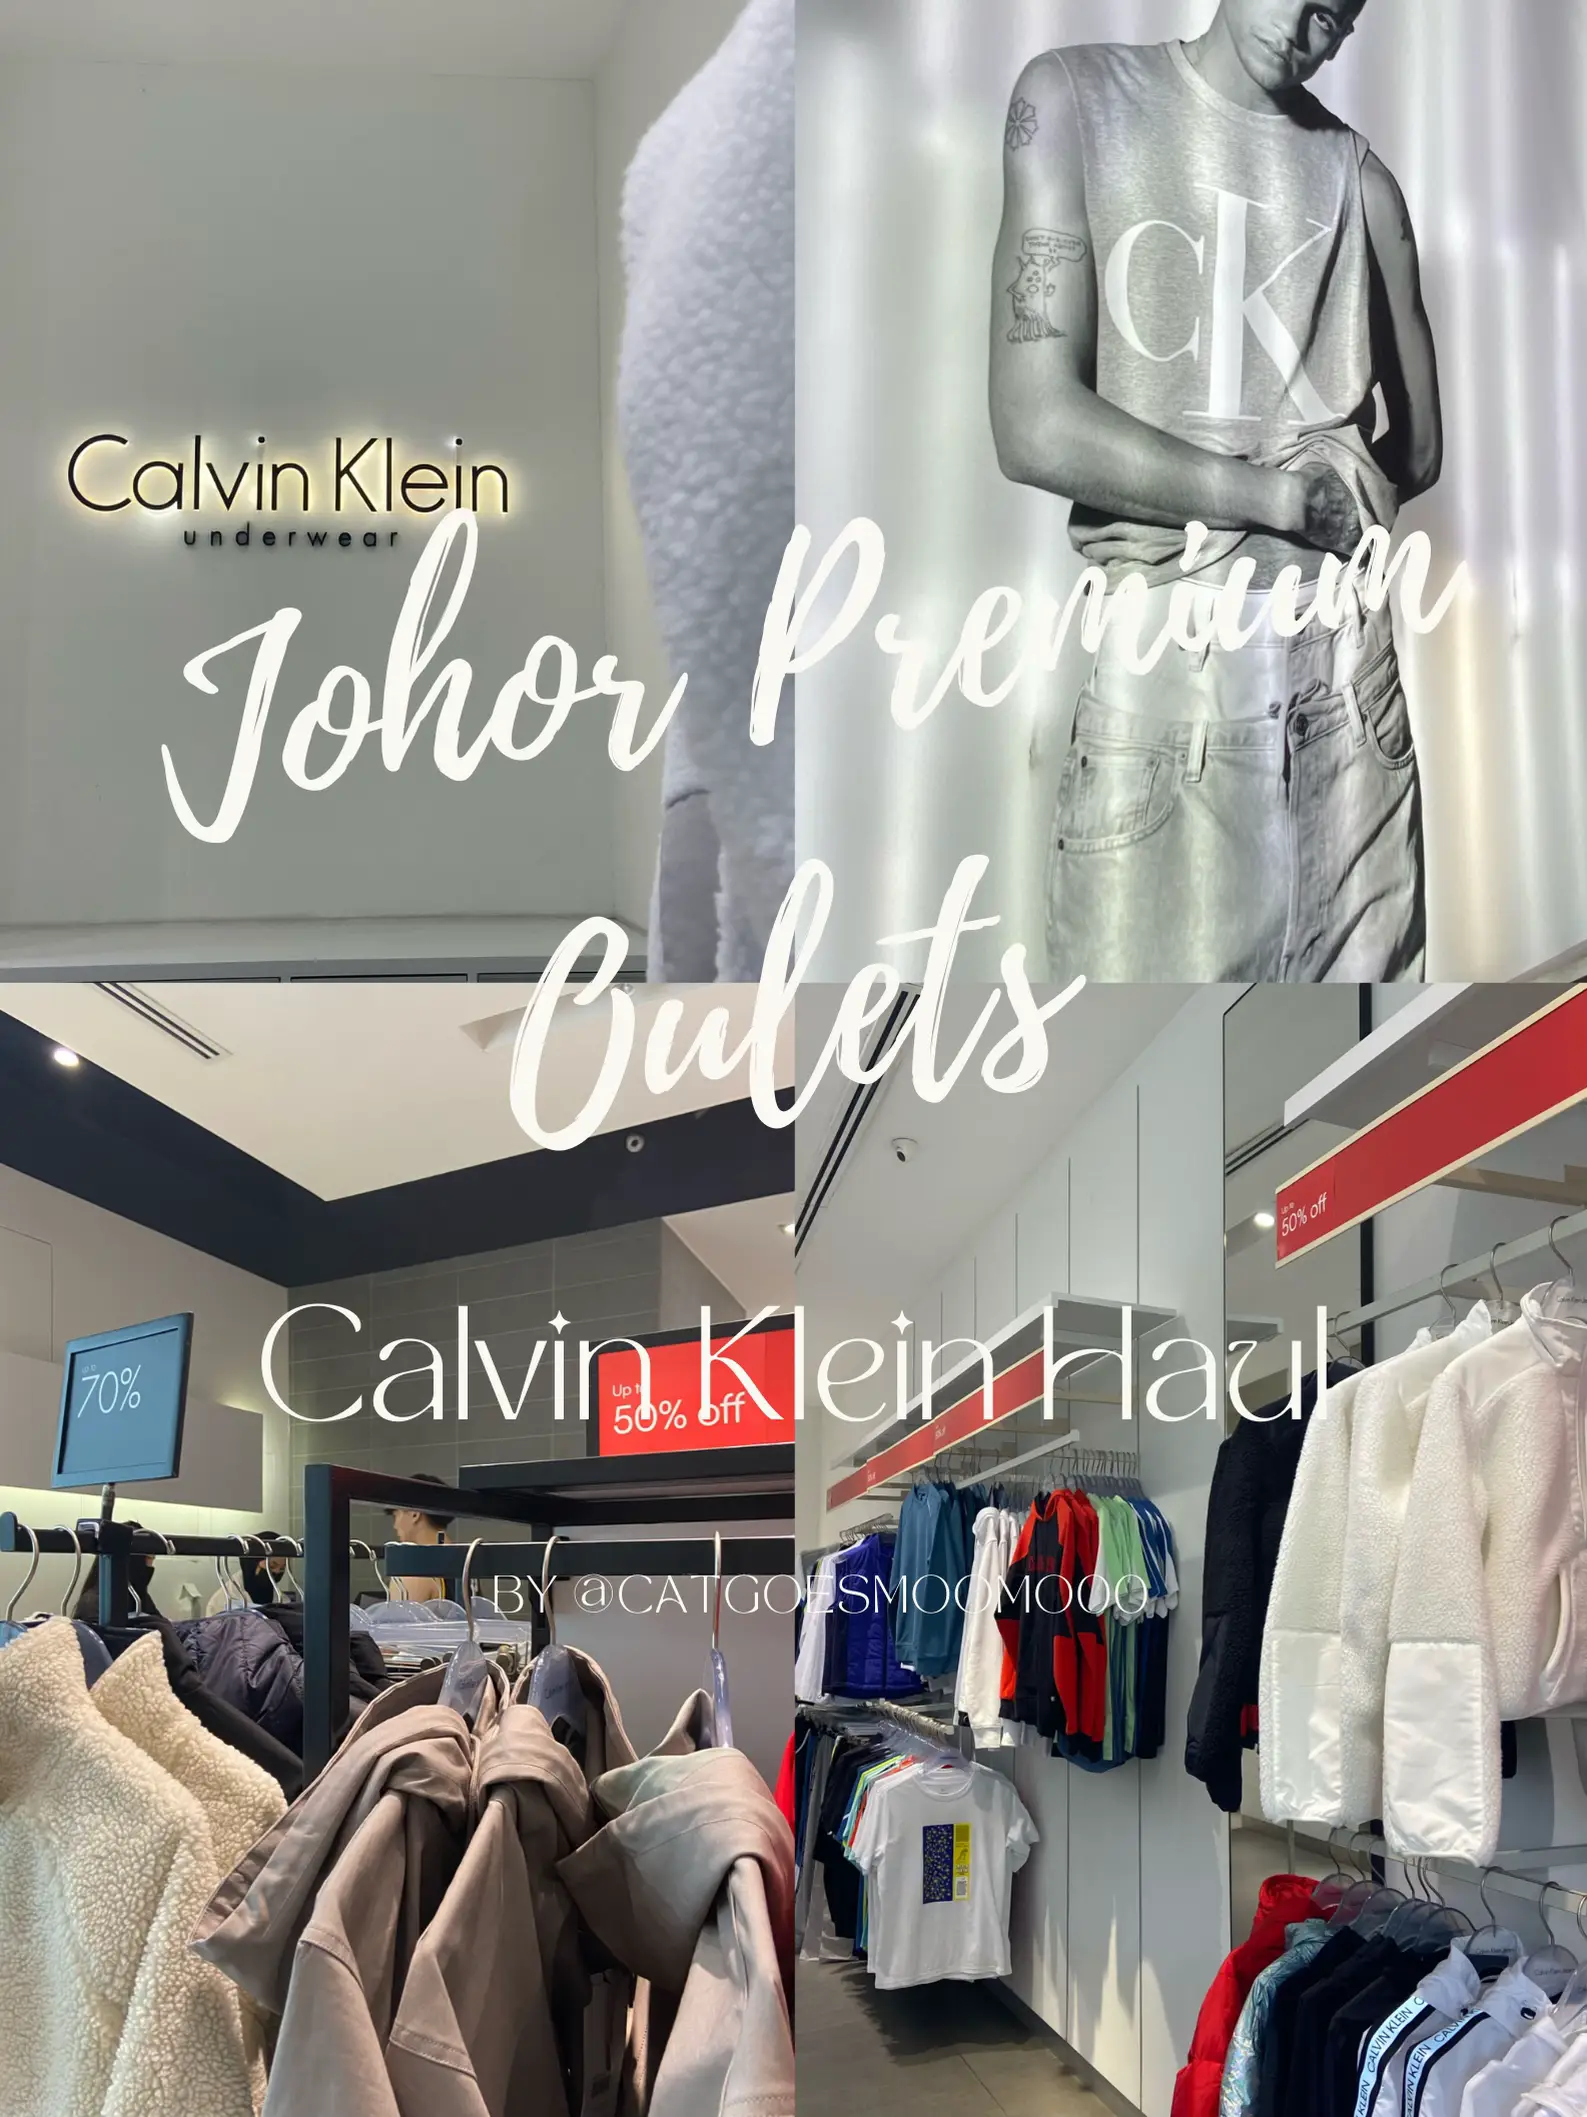 Haul, JPO - Johor Premium Outlet